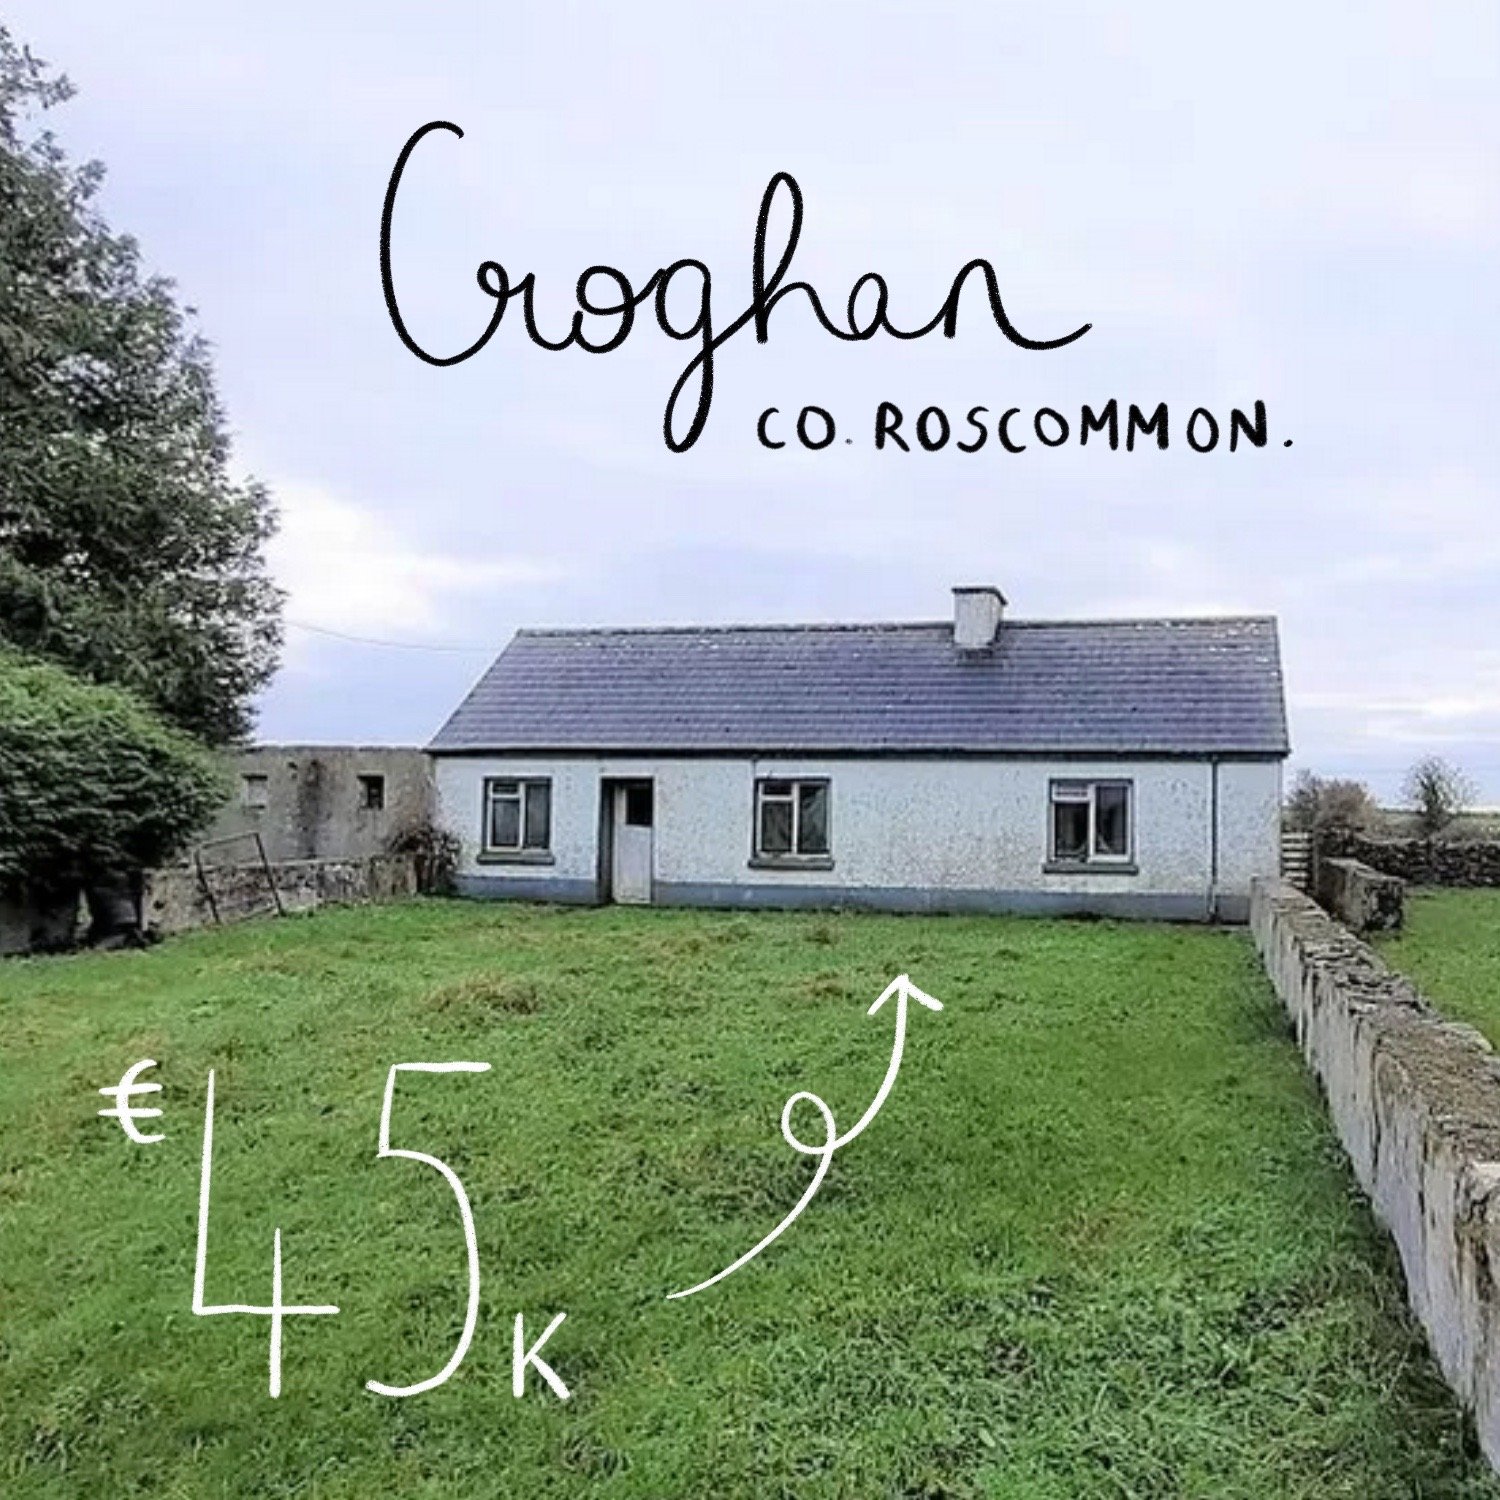 Faus, Croghan, Croghan, Co. Roscommon. €45k